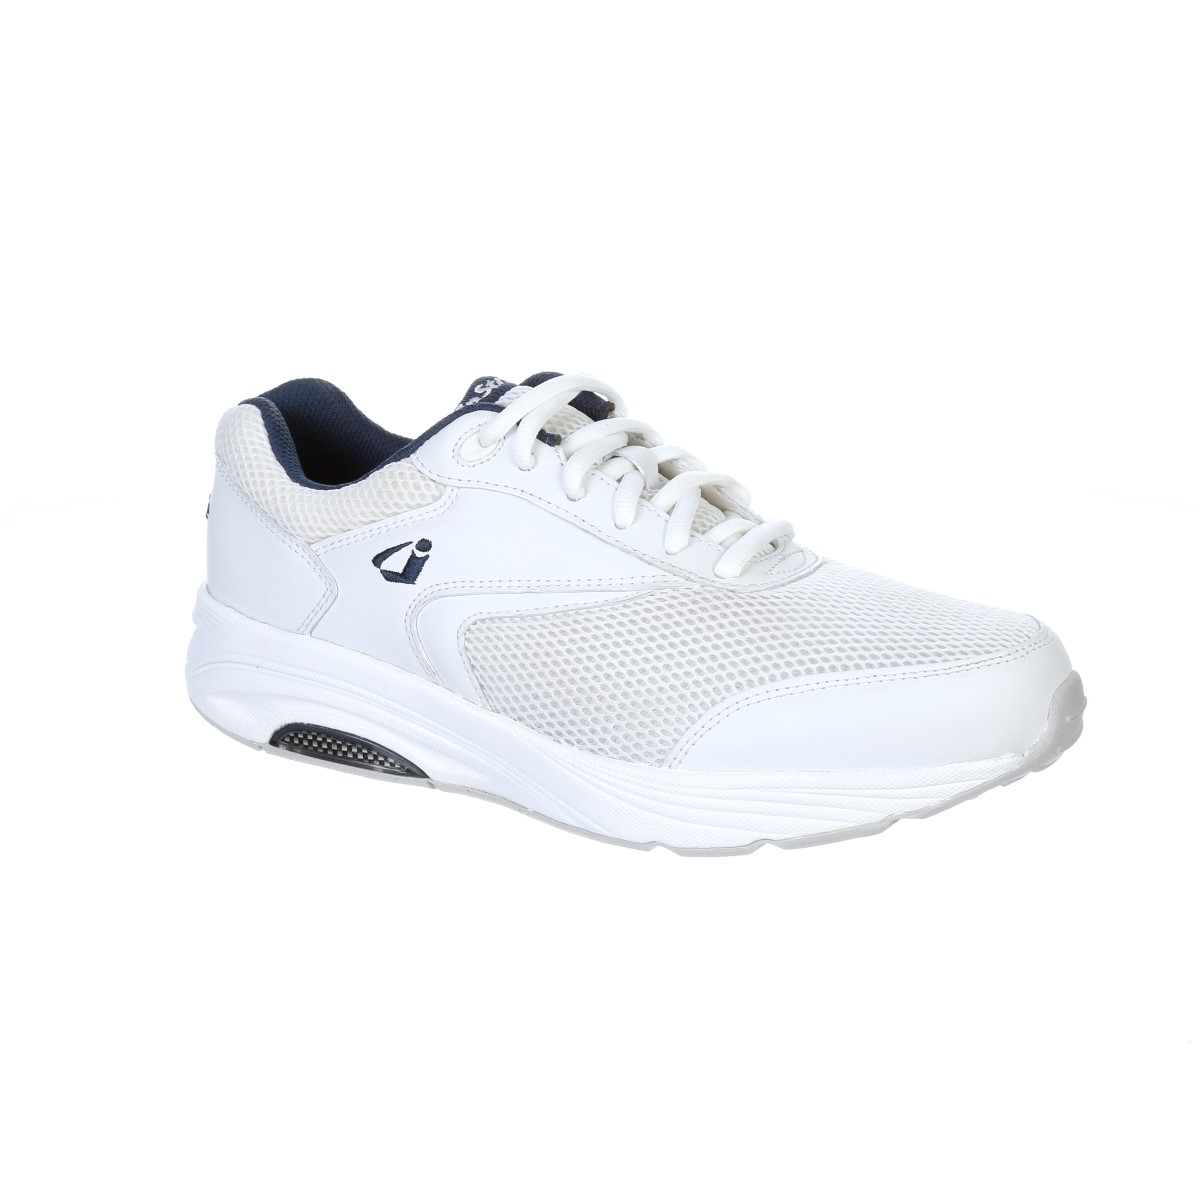 orthopedic tennis shoes for men